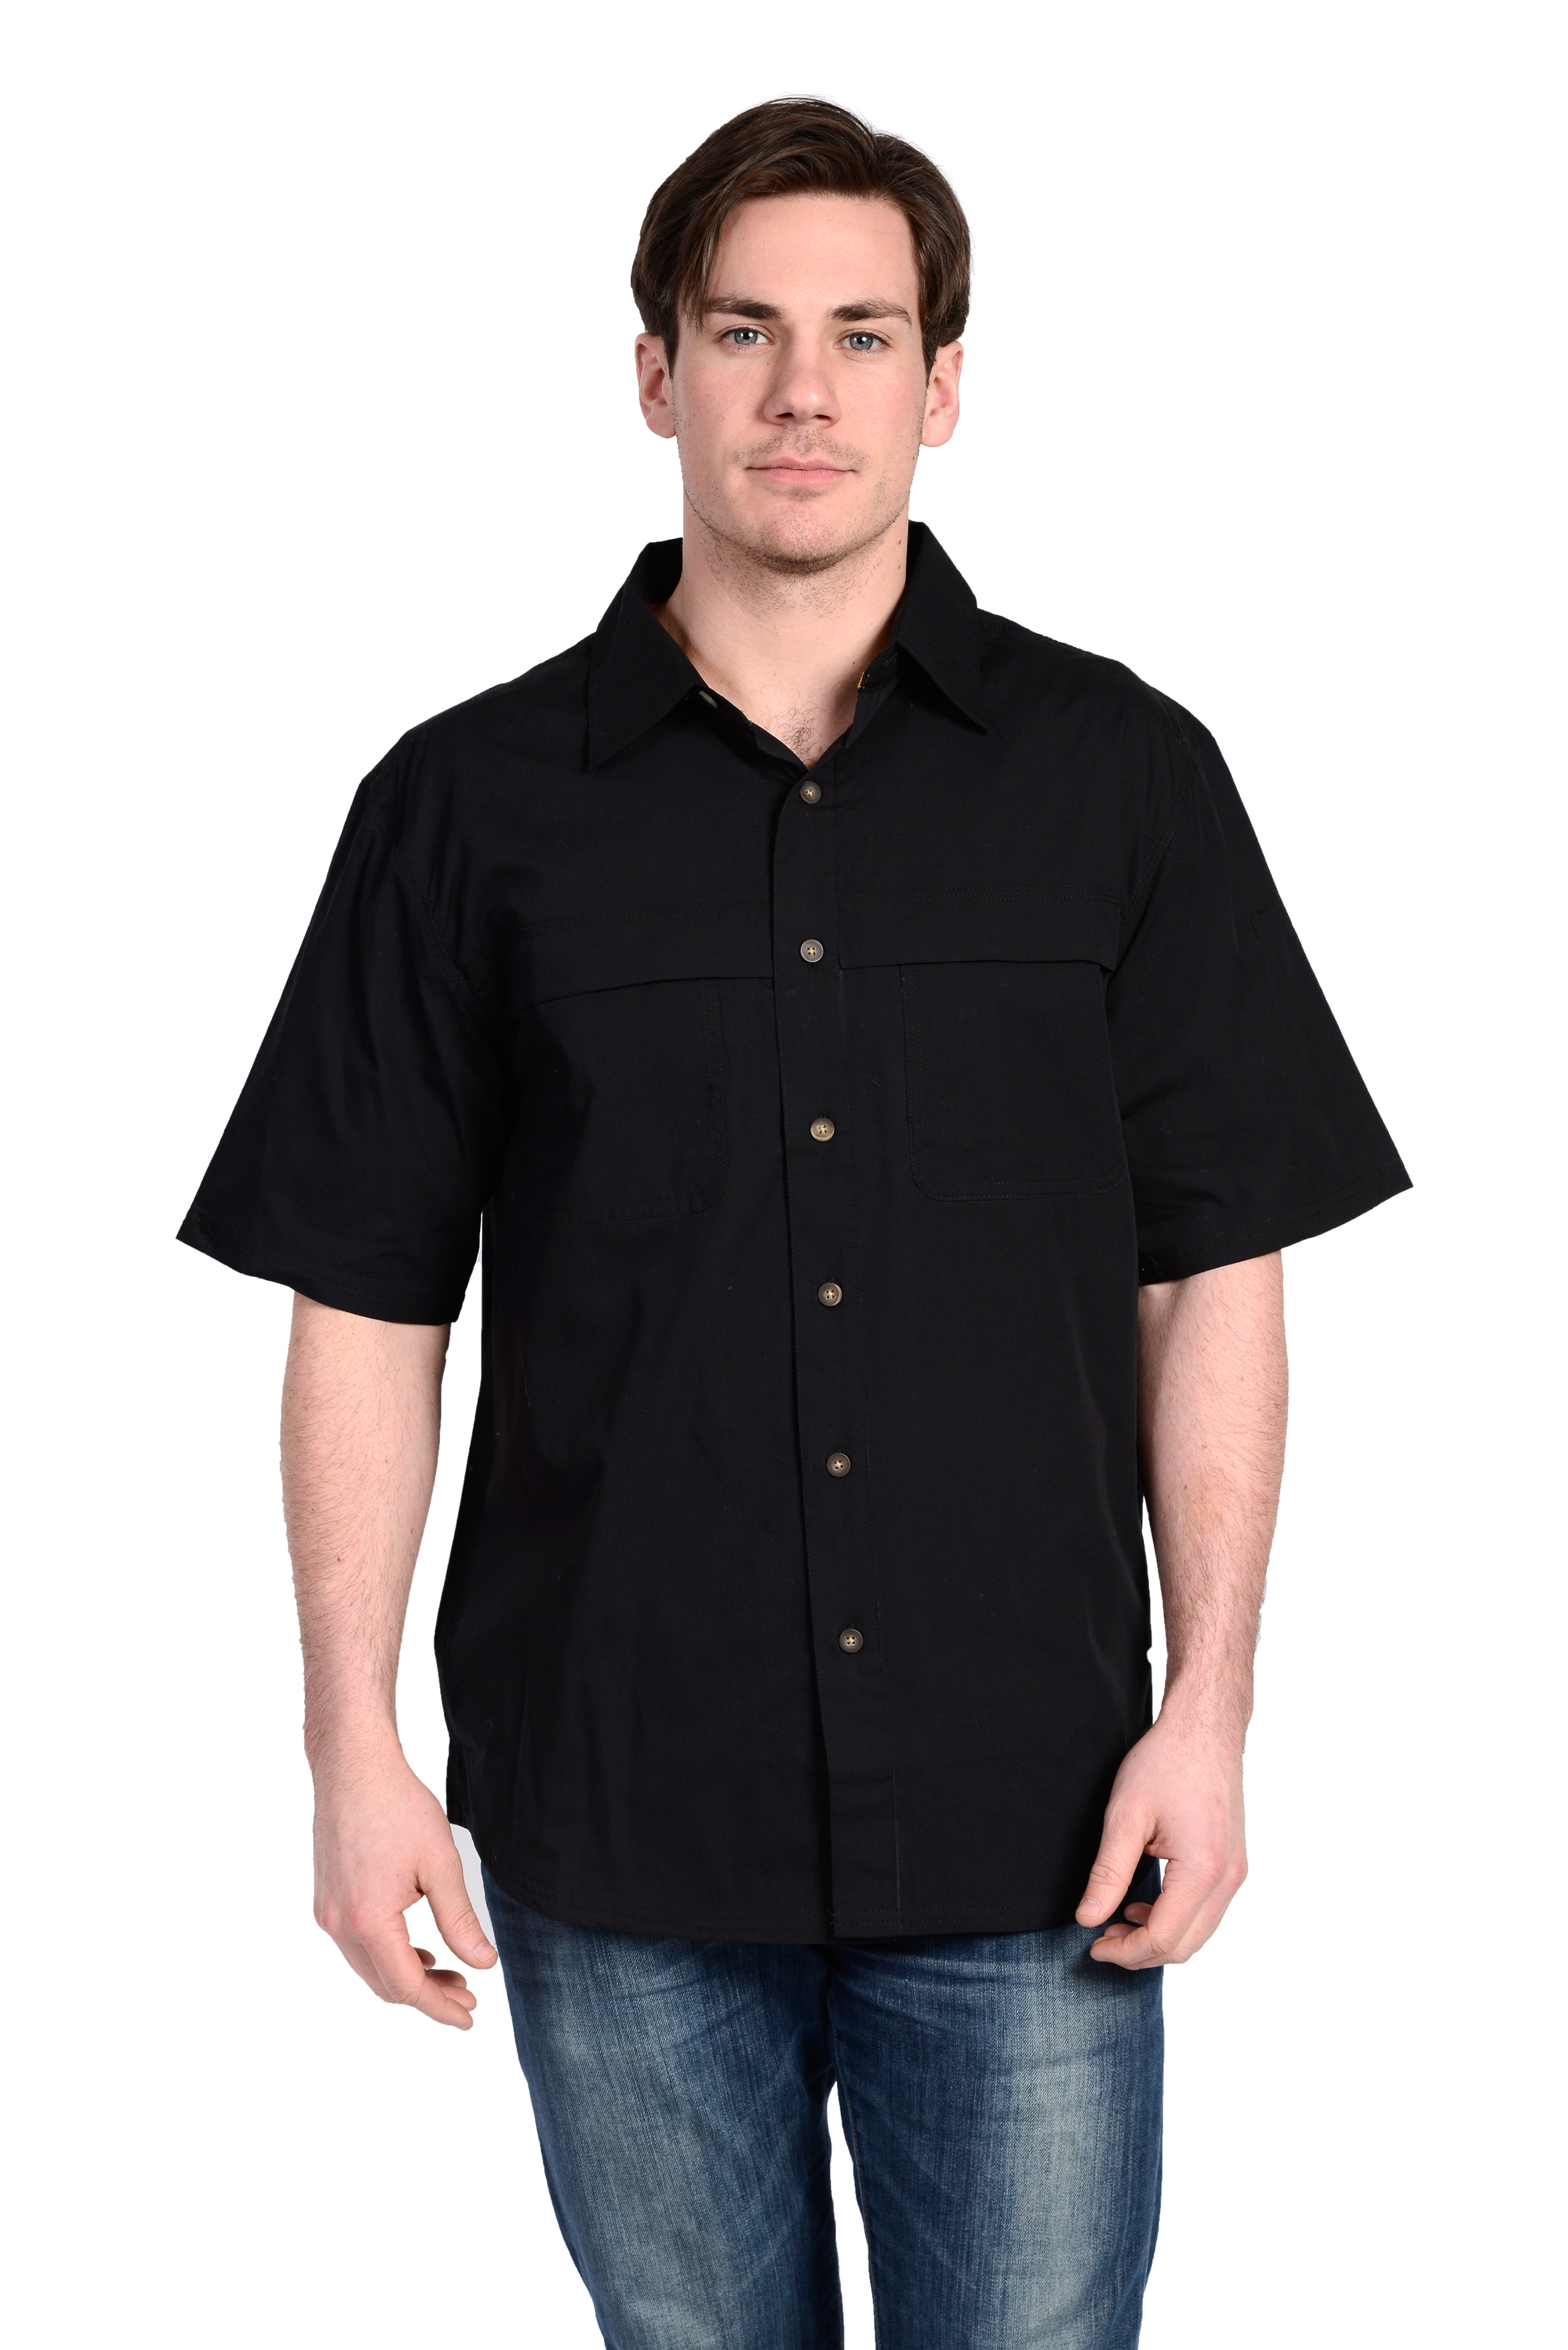 Stanley Men's short sleeve cotton/poly rip-stop work shirt